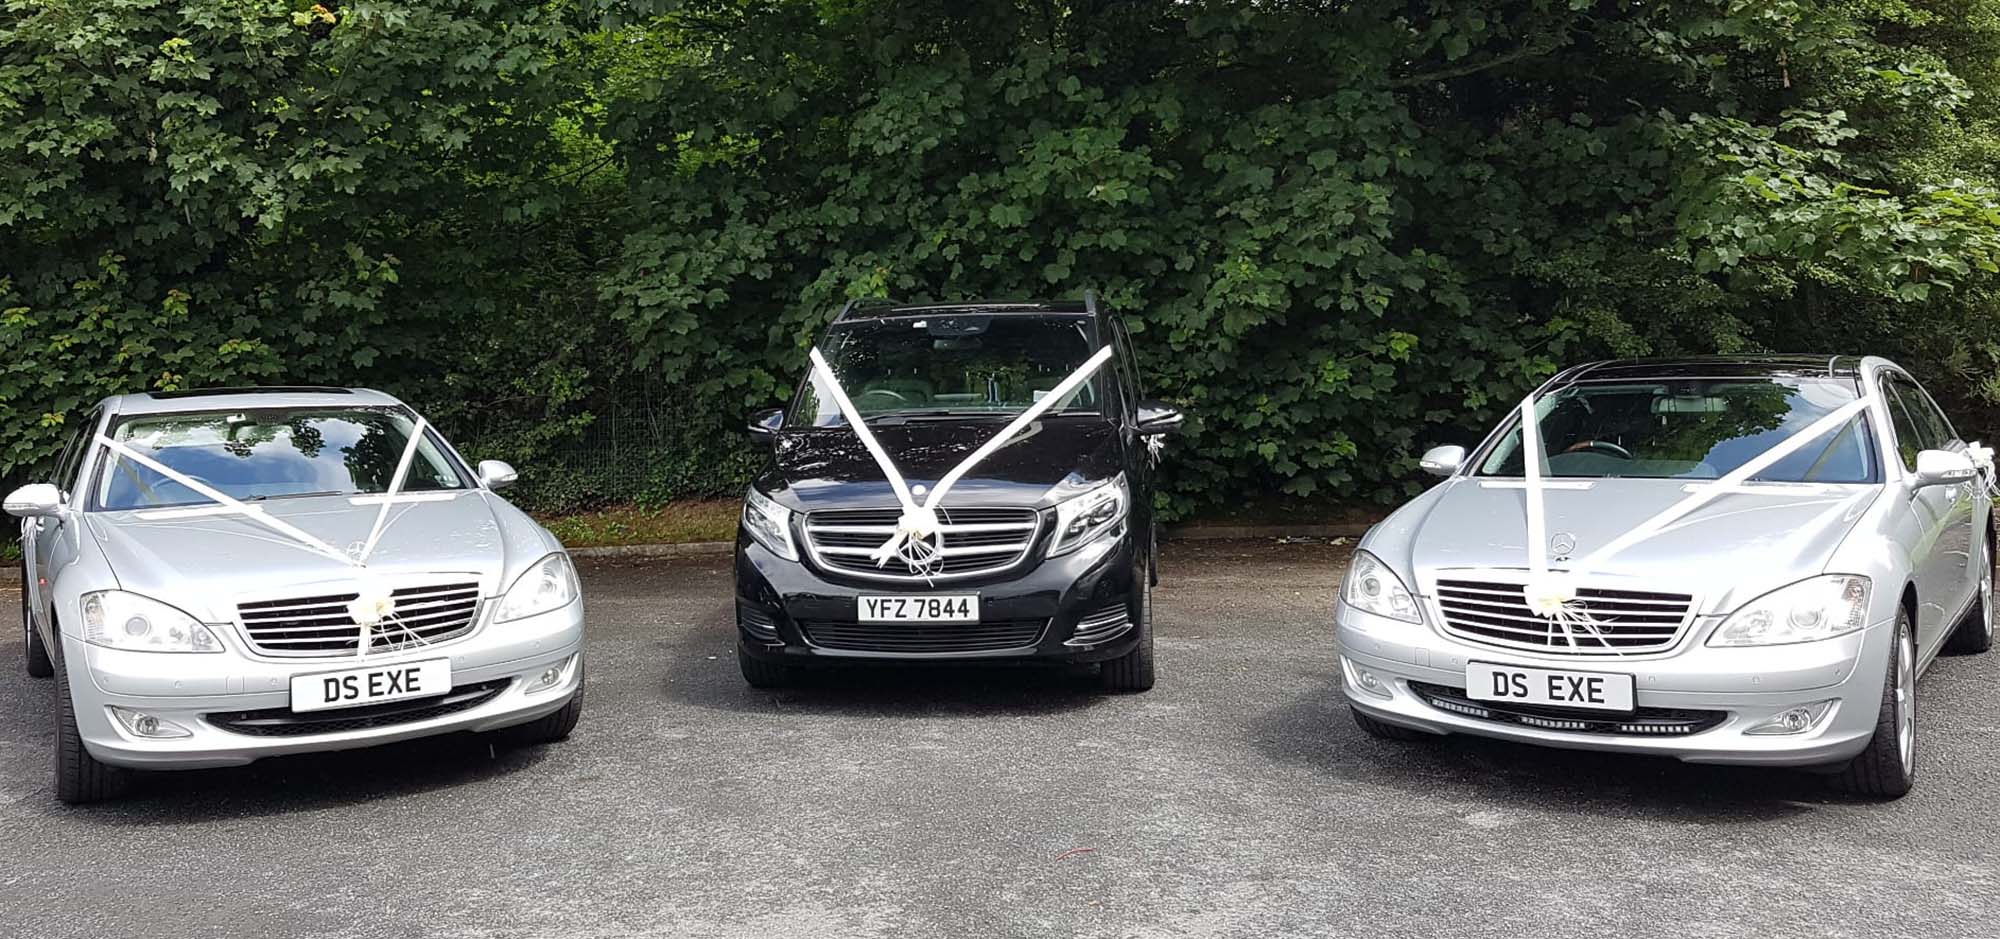 3 Mercedes wedding cars